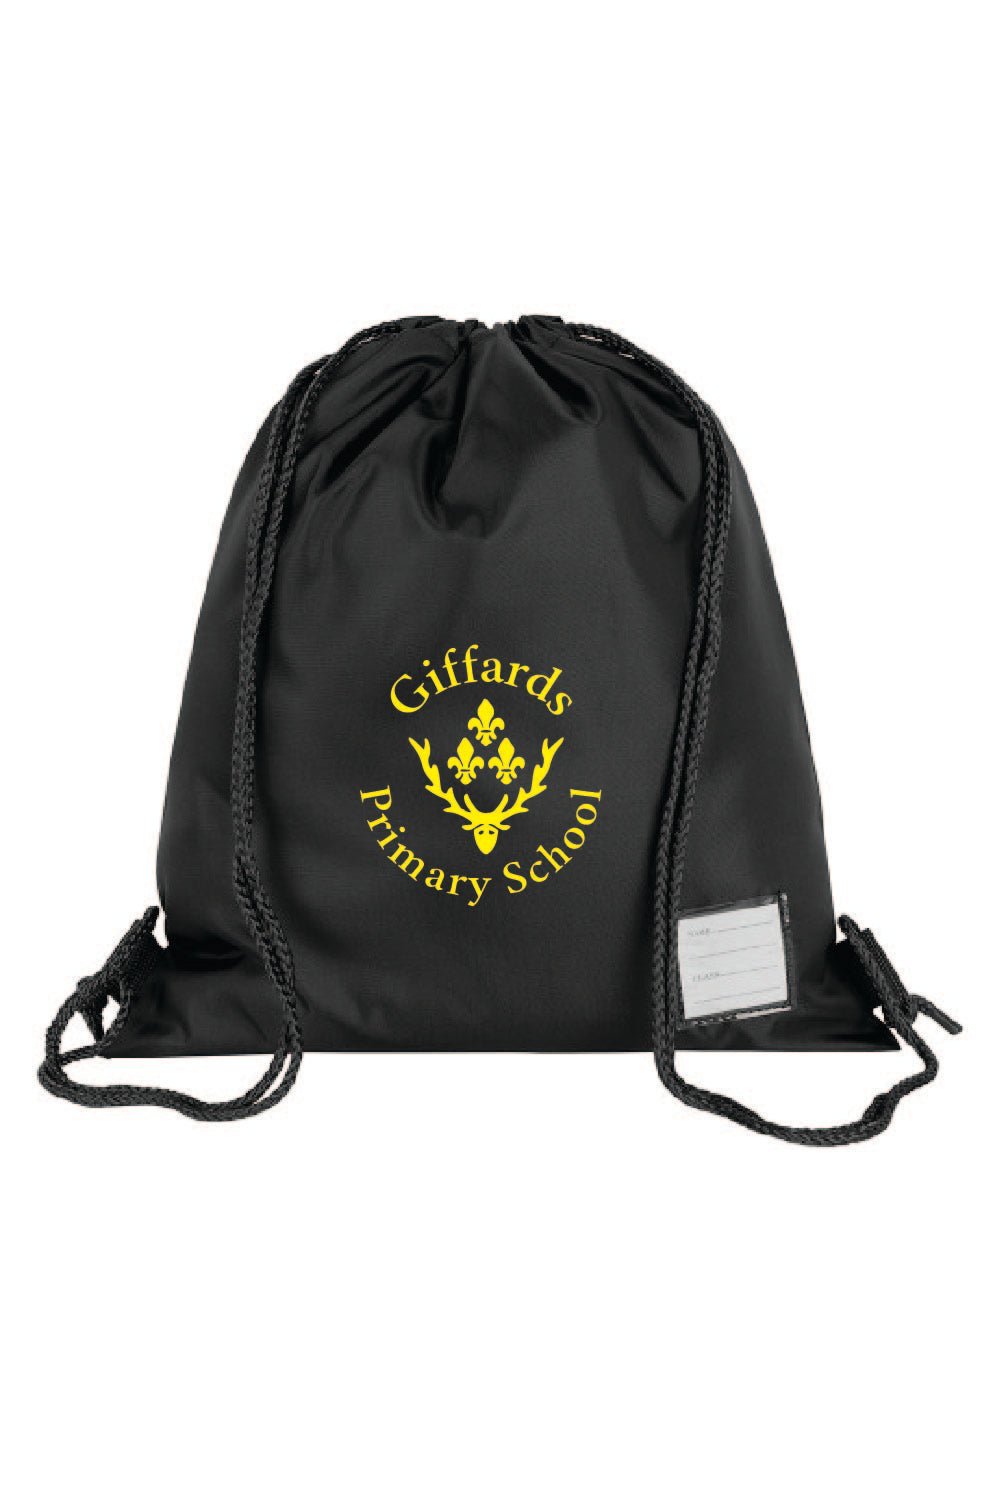 Giffards Primary PE Bag with Personalisation - Uniformwise Schoolwear